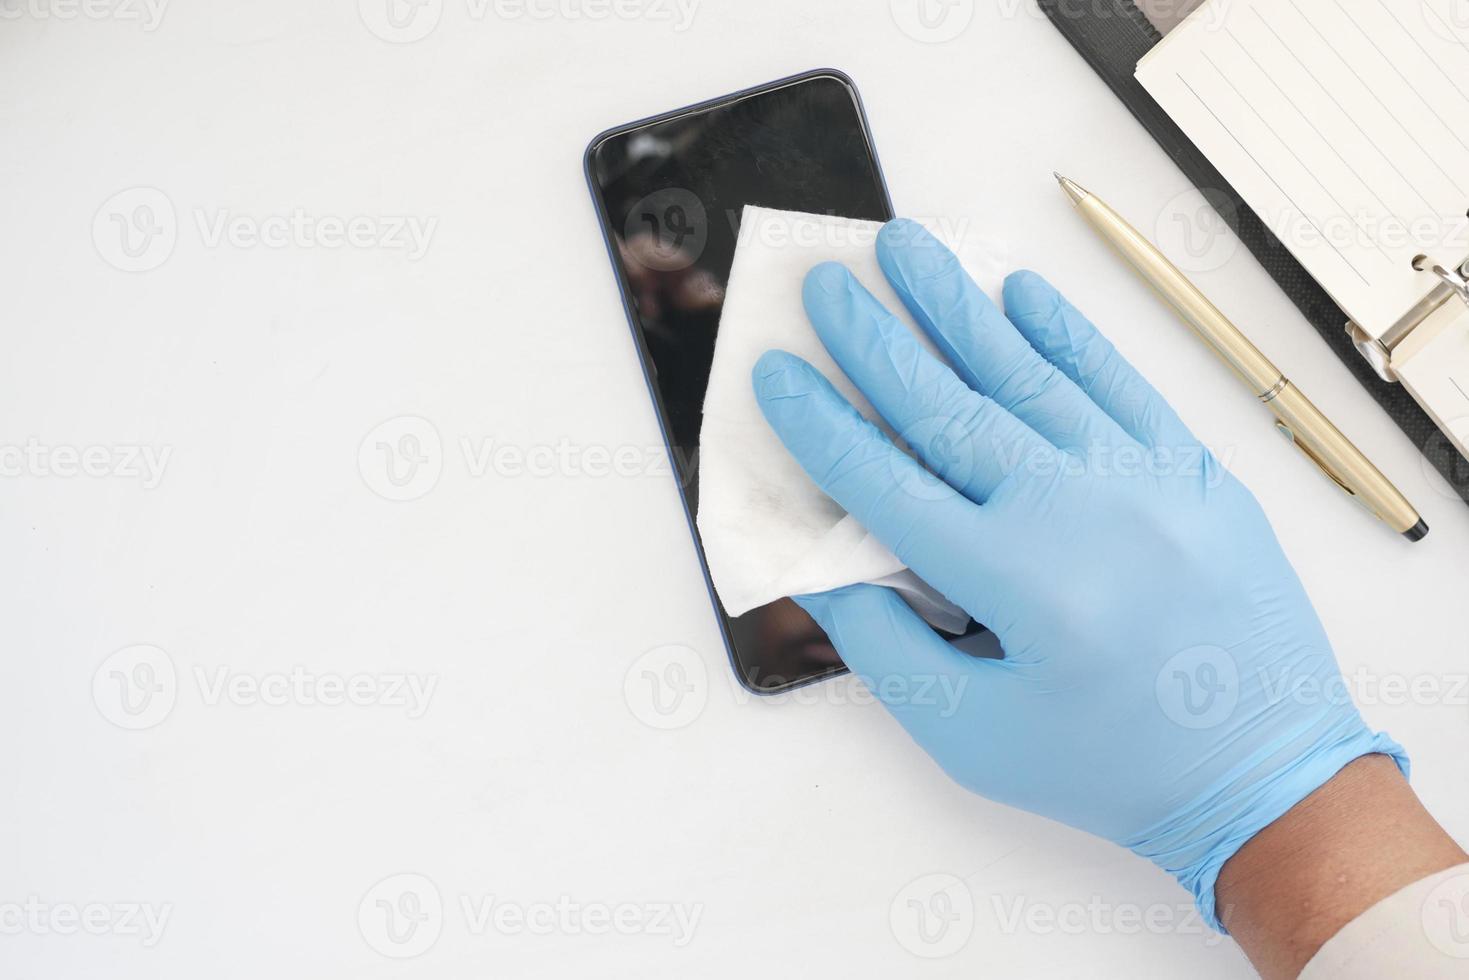 limpieza de la pantalla del teléfono móvil para prevenir virus en la mesa foto